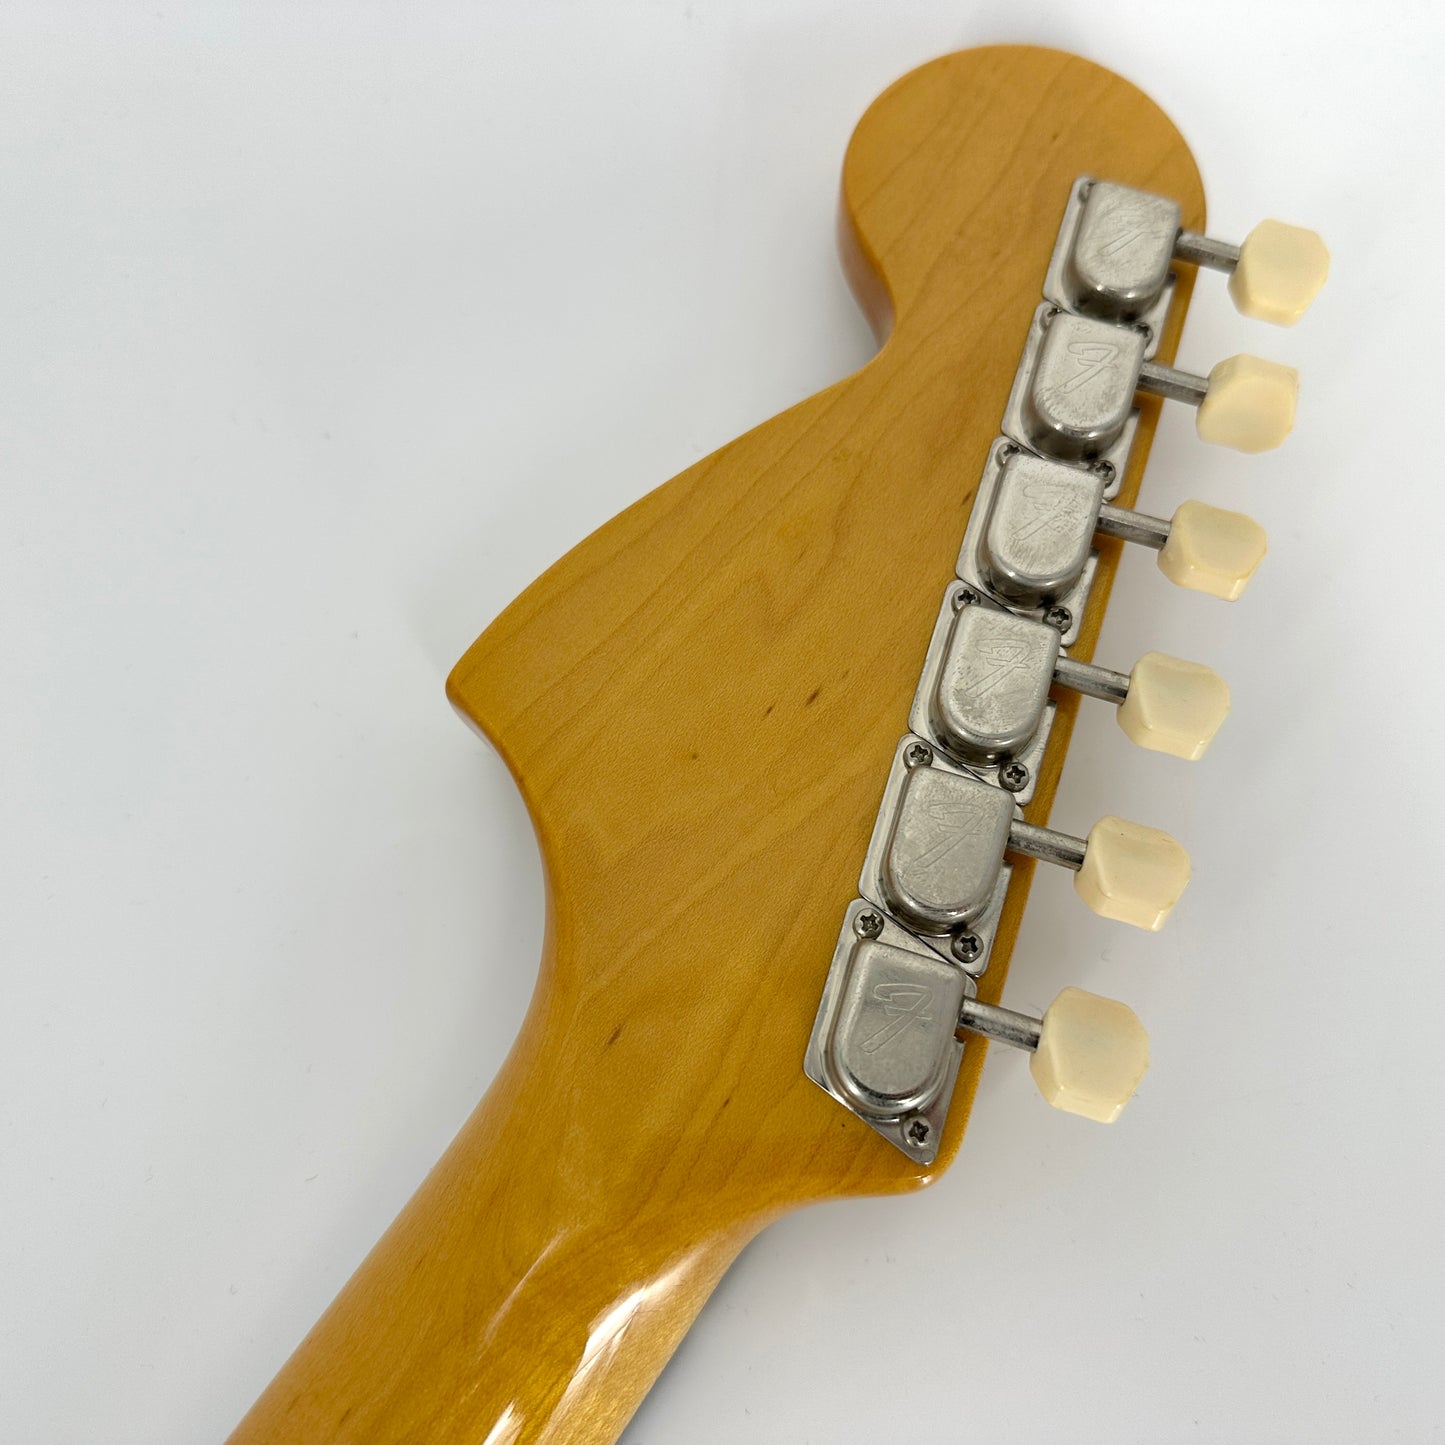 1994-95 Fender Japan '65 Mustang – Daphne Blue